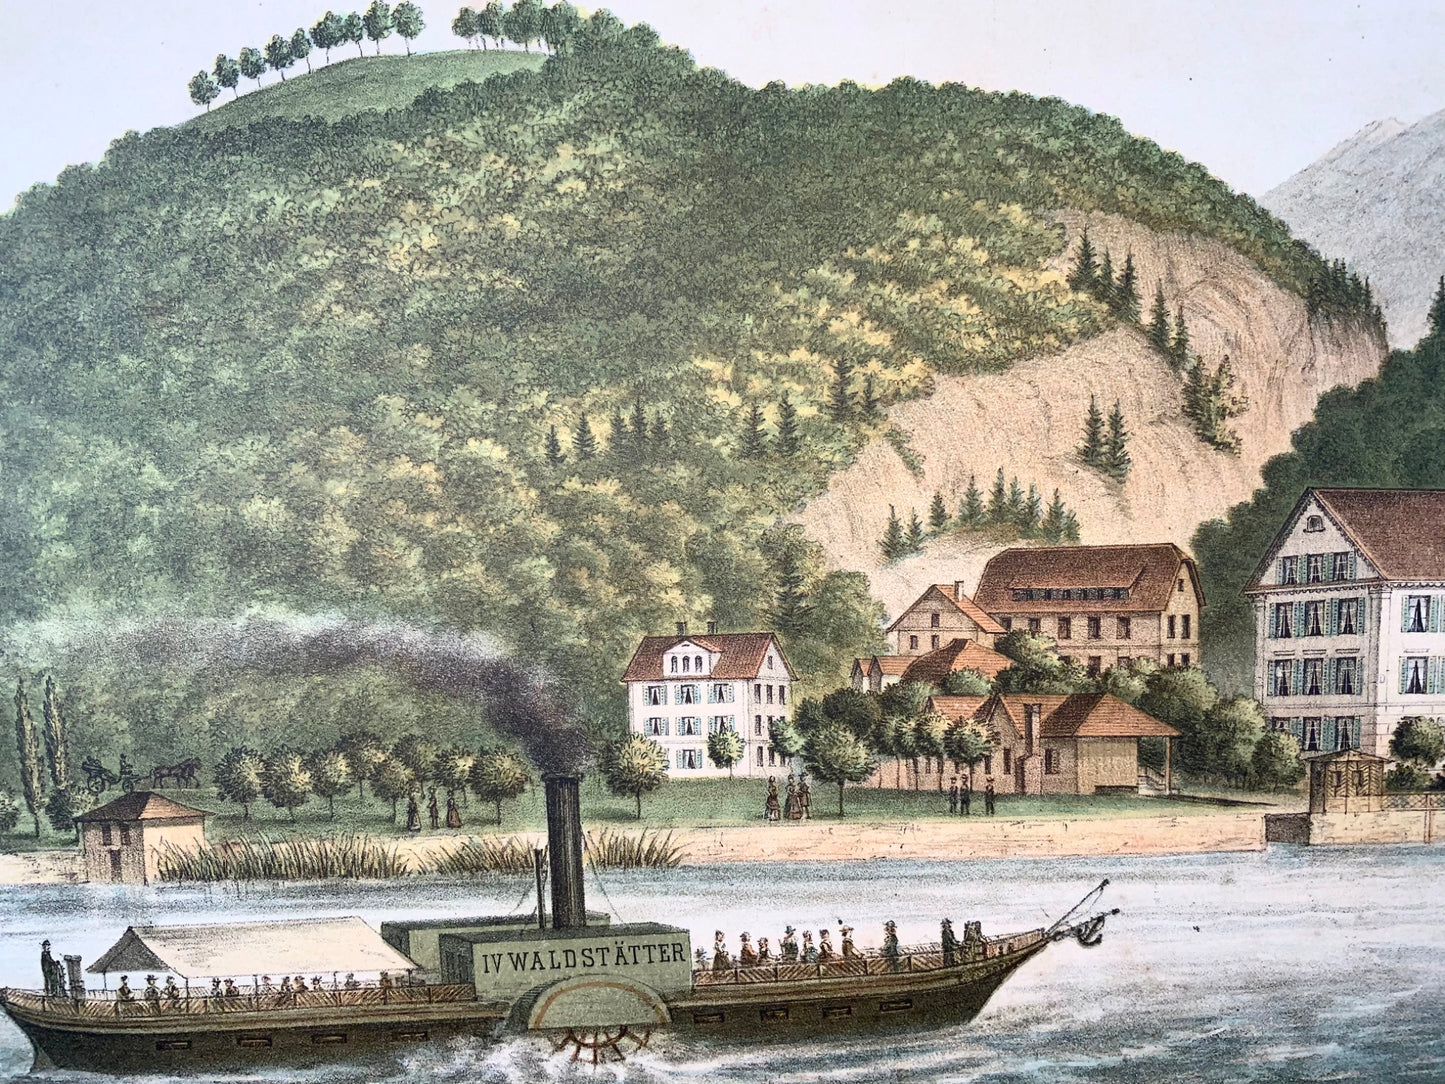 1860 c. SWISS TRAVEL Poster 55x62 cm Rotzloch Stanstadt Steamship